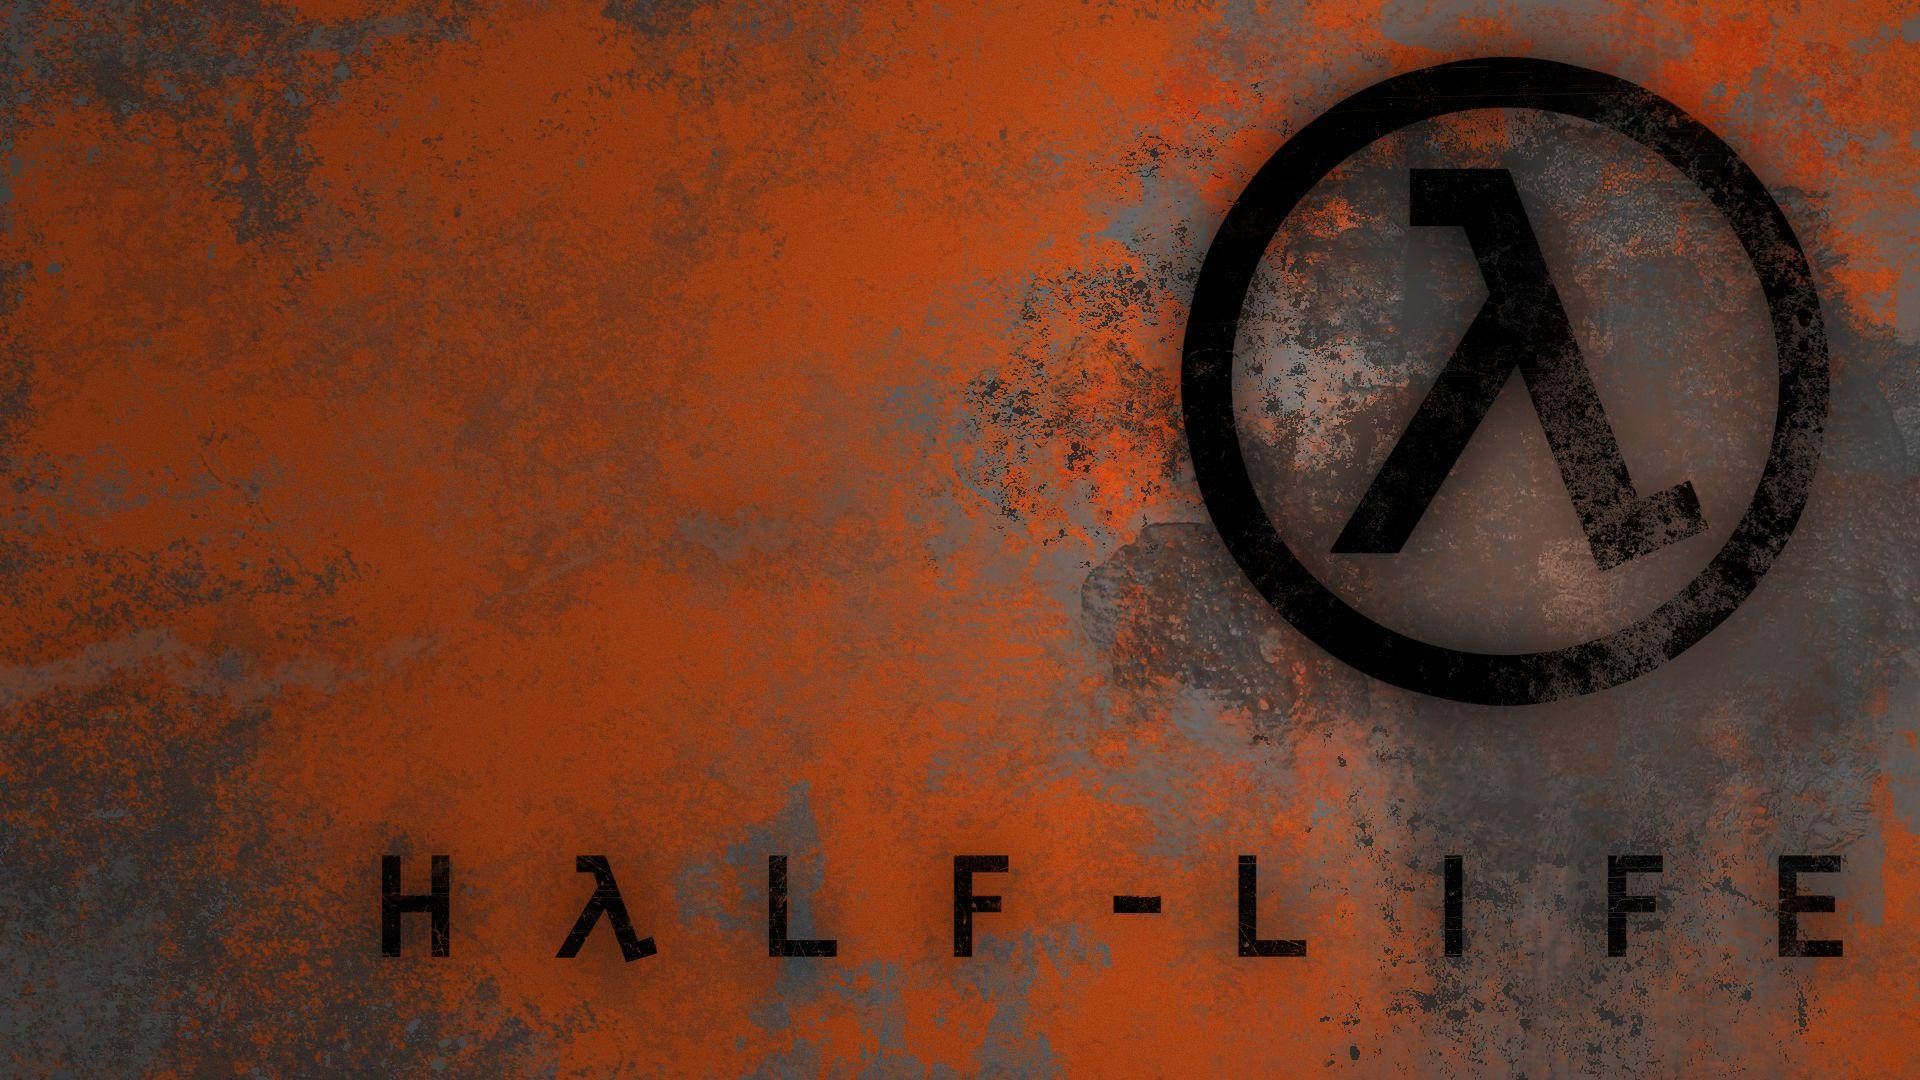 Half-life Logo On Rusty Wall Wallpaper